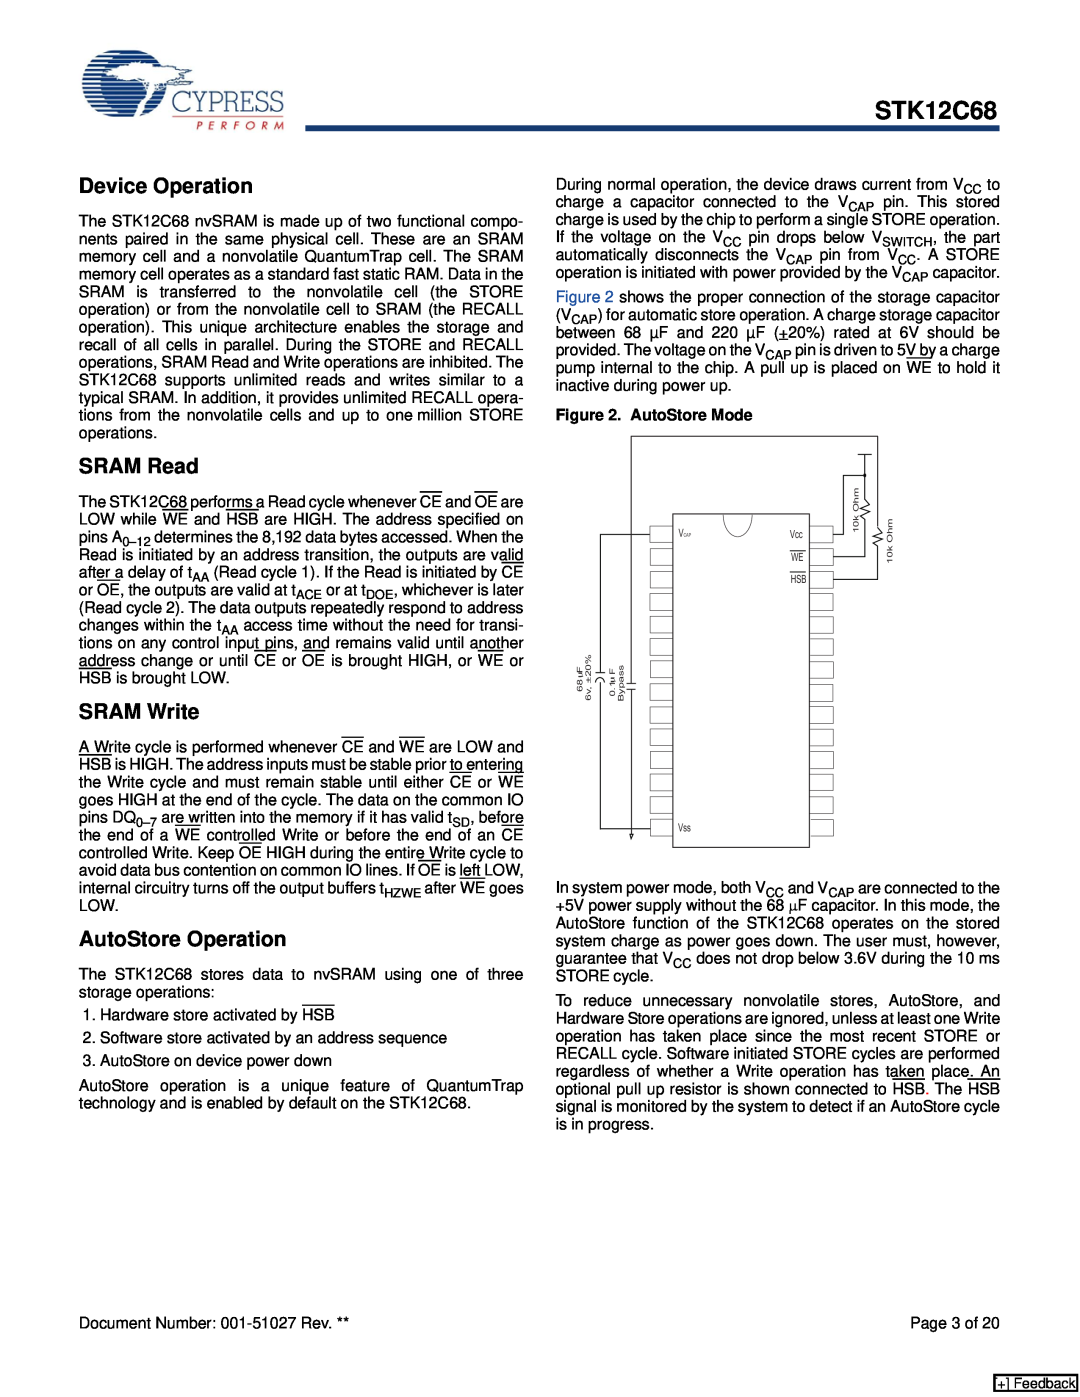 Cypress STK12C68 manual Device Operation, SRAM Read, SRAM Write, AutoStore Operation 